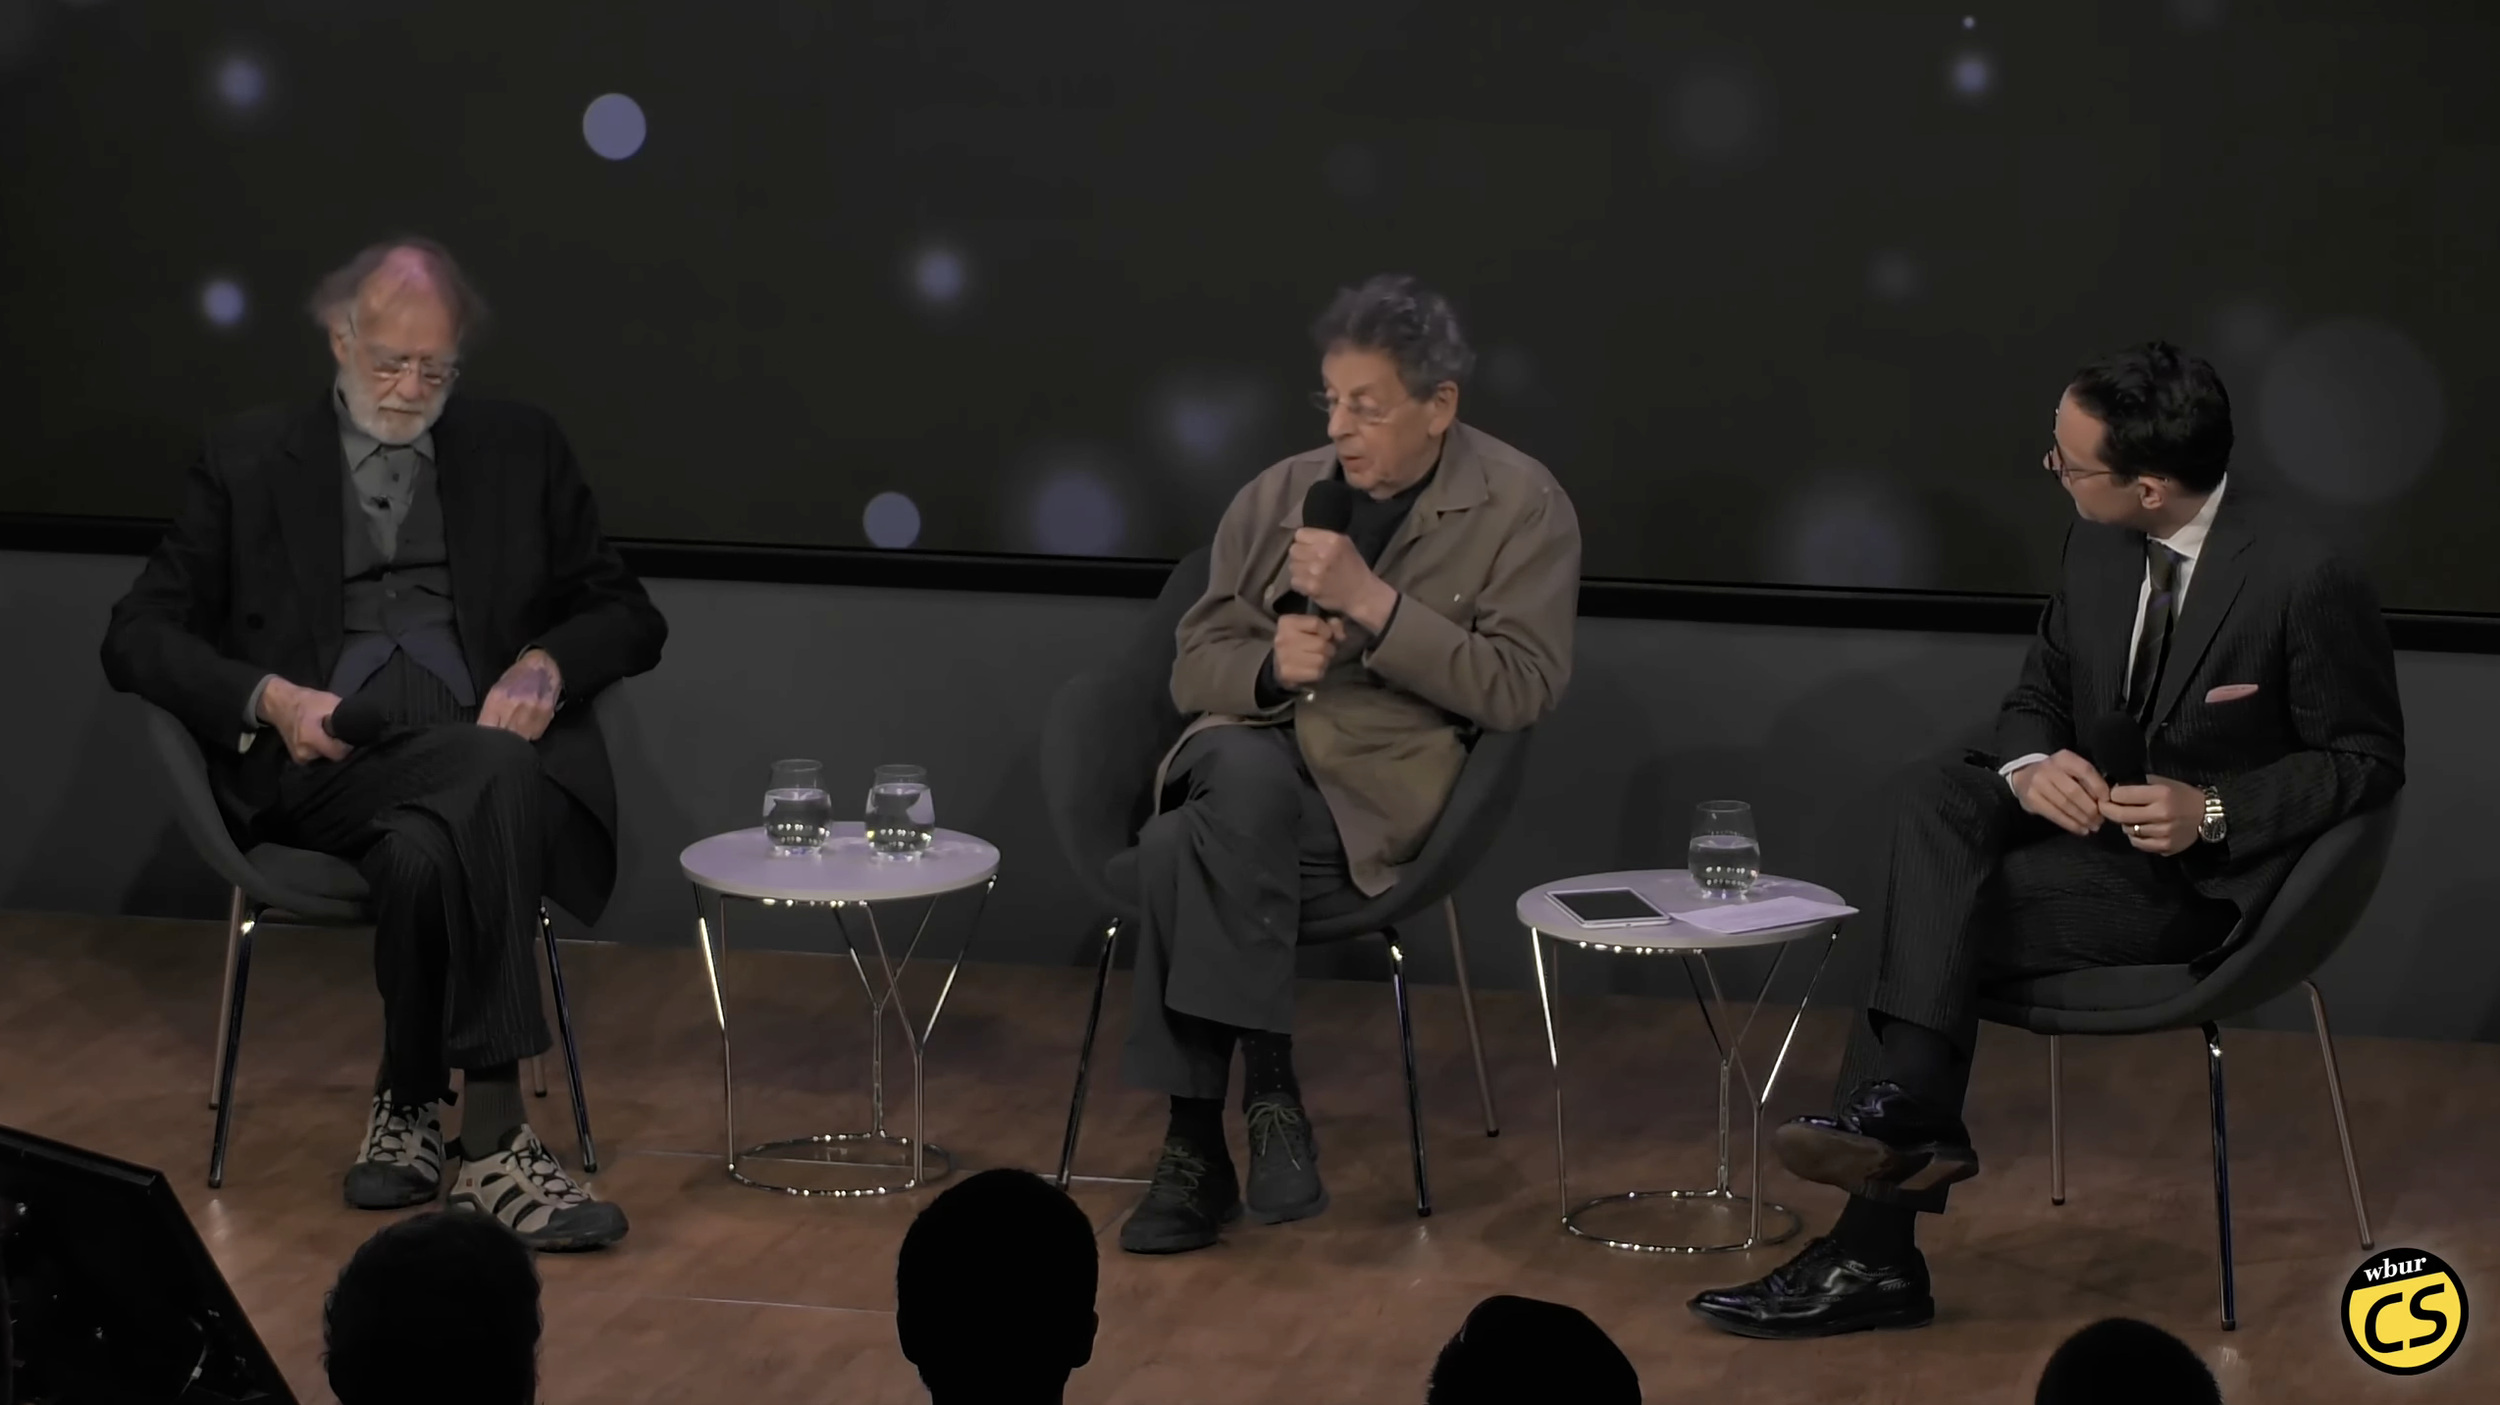 2020 - A Conversation With Godfrey Reggio And Philip Glass - WBUR CitySpace